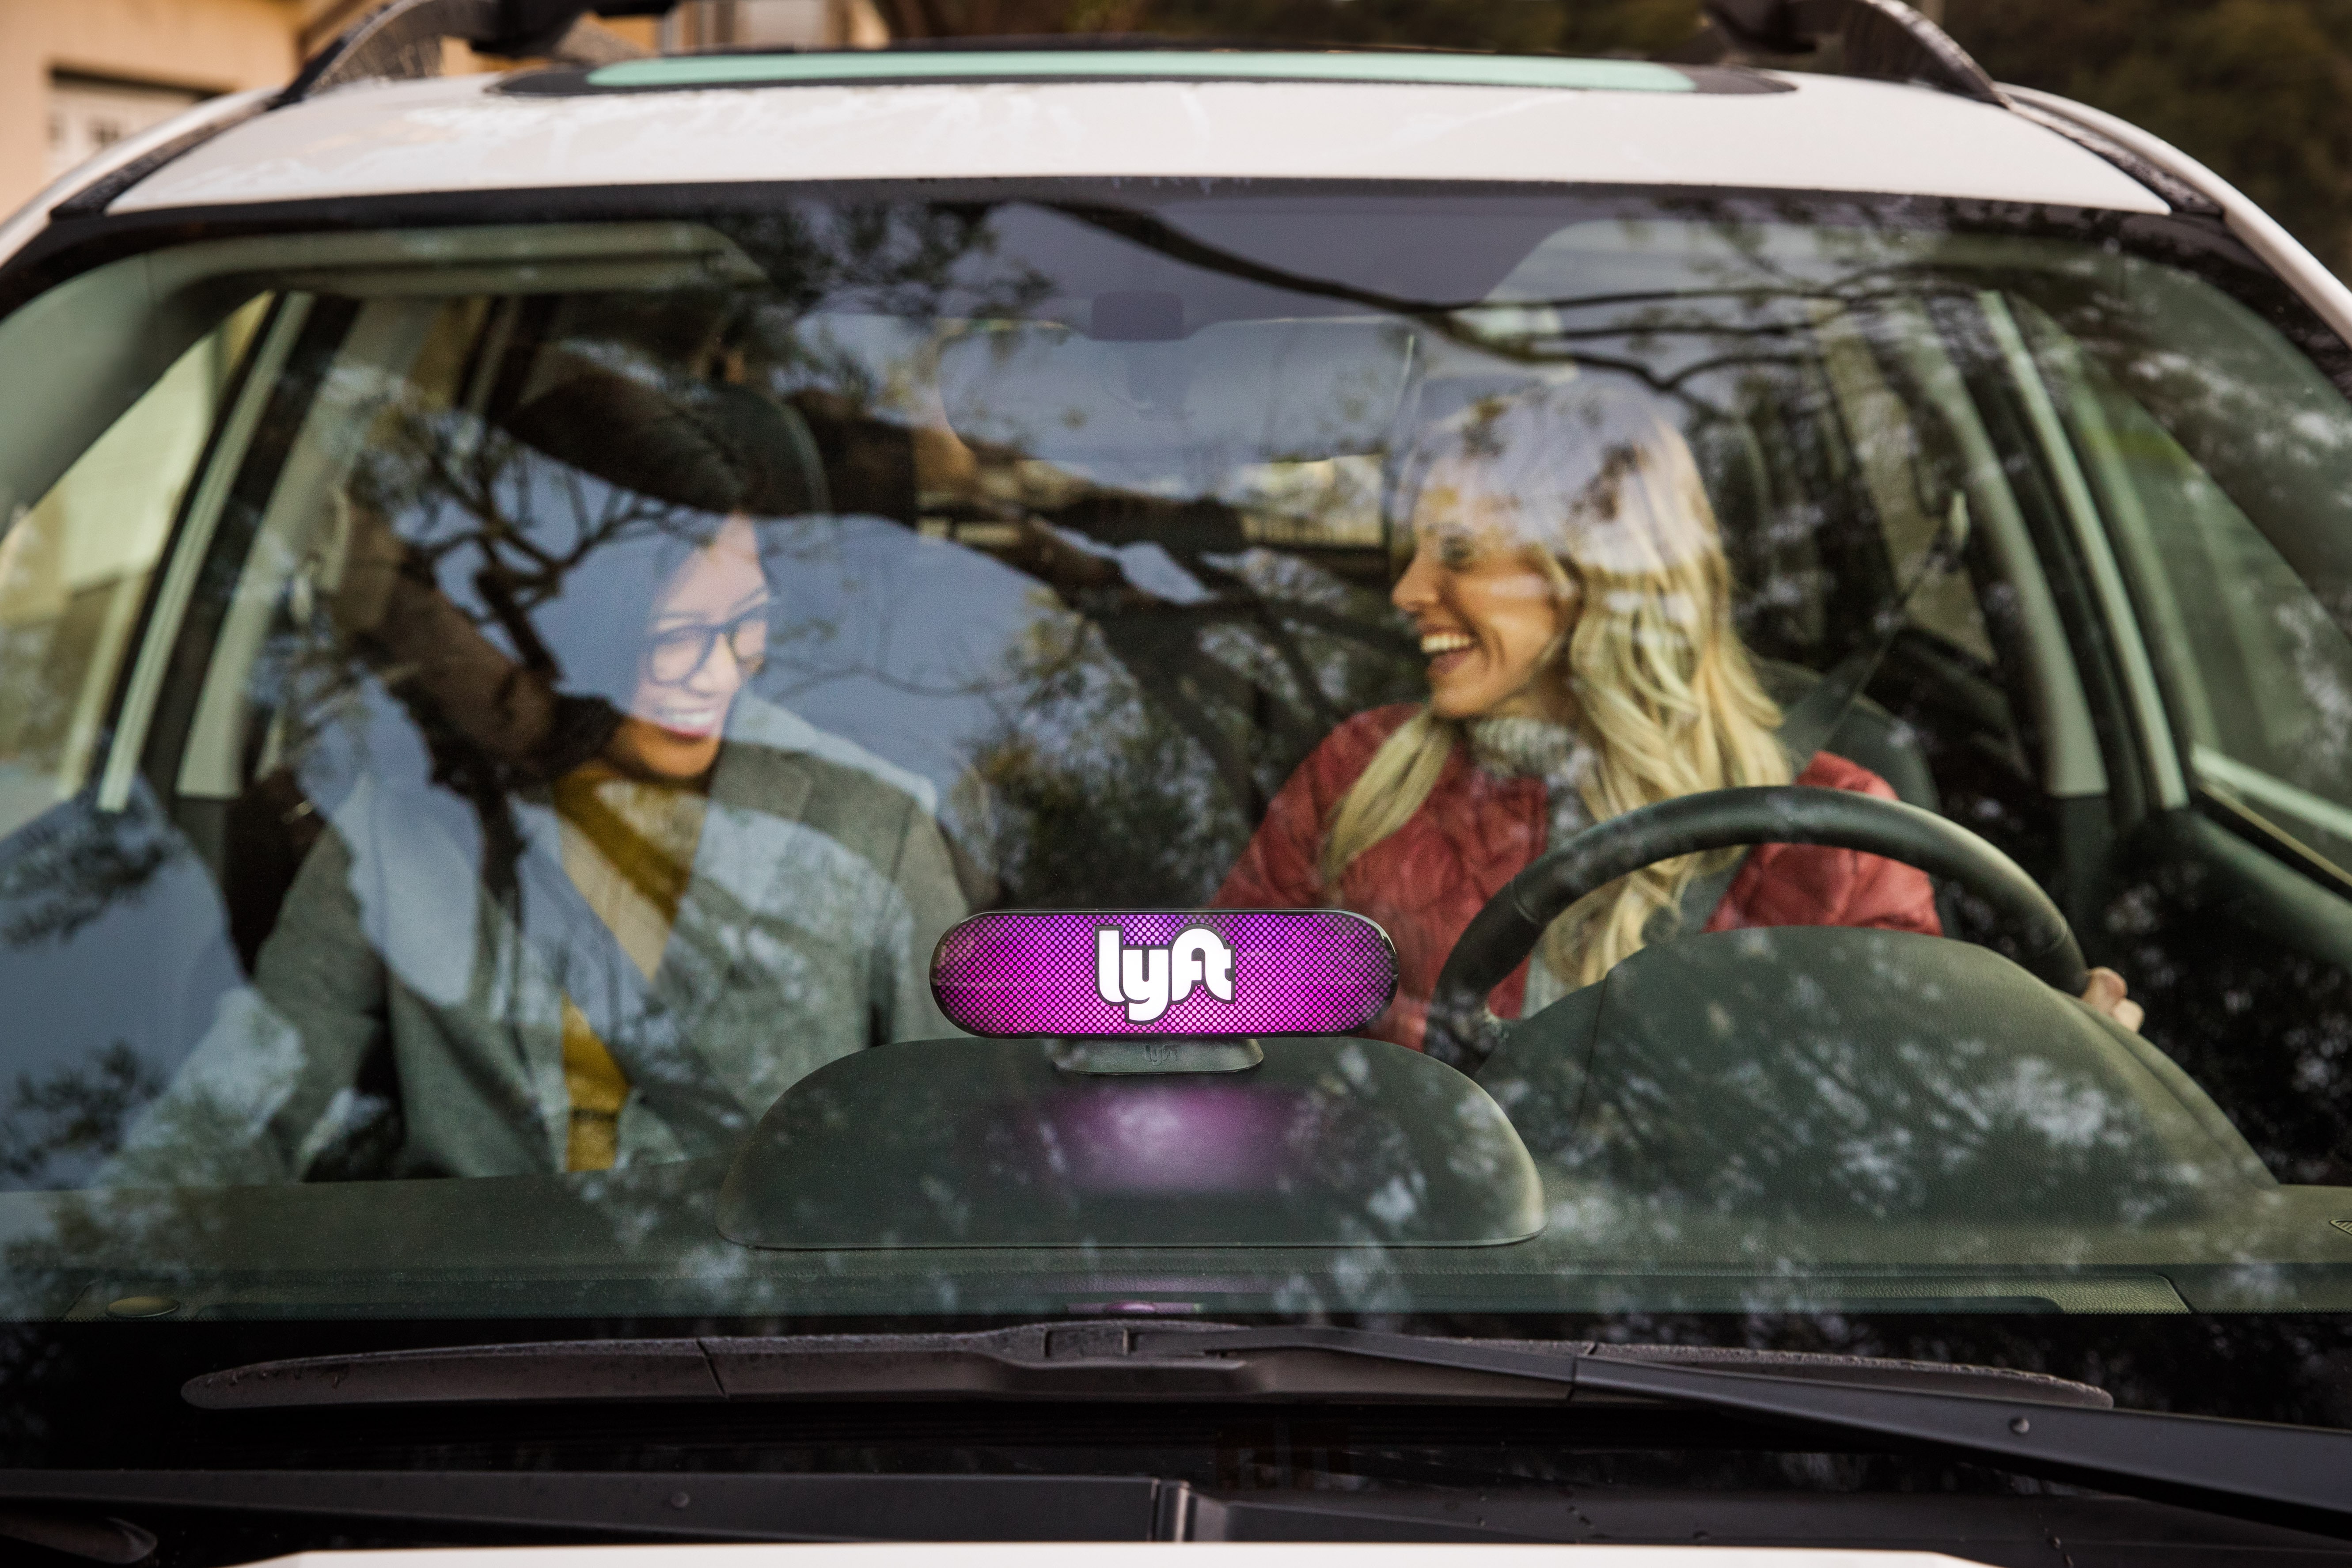 Lyft vehicle with a passenger